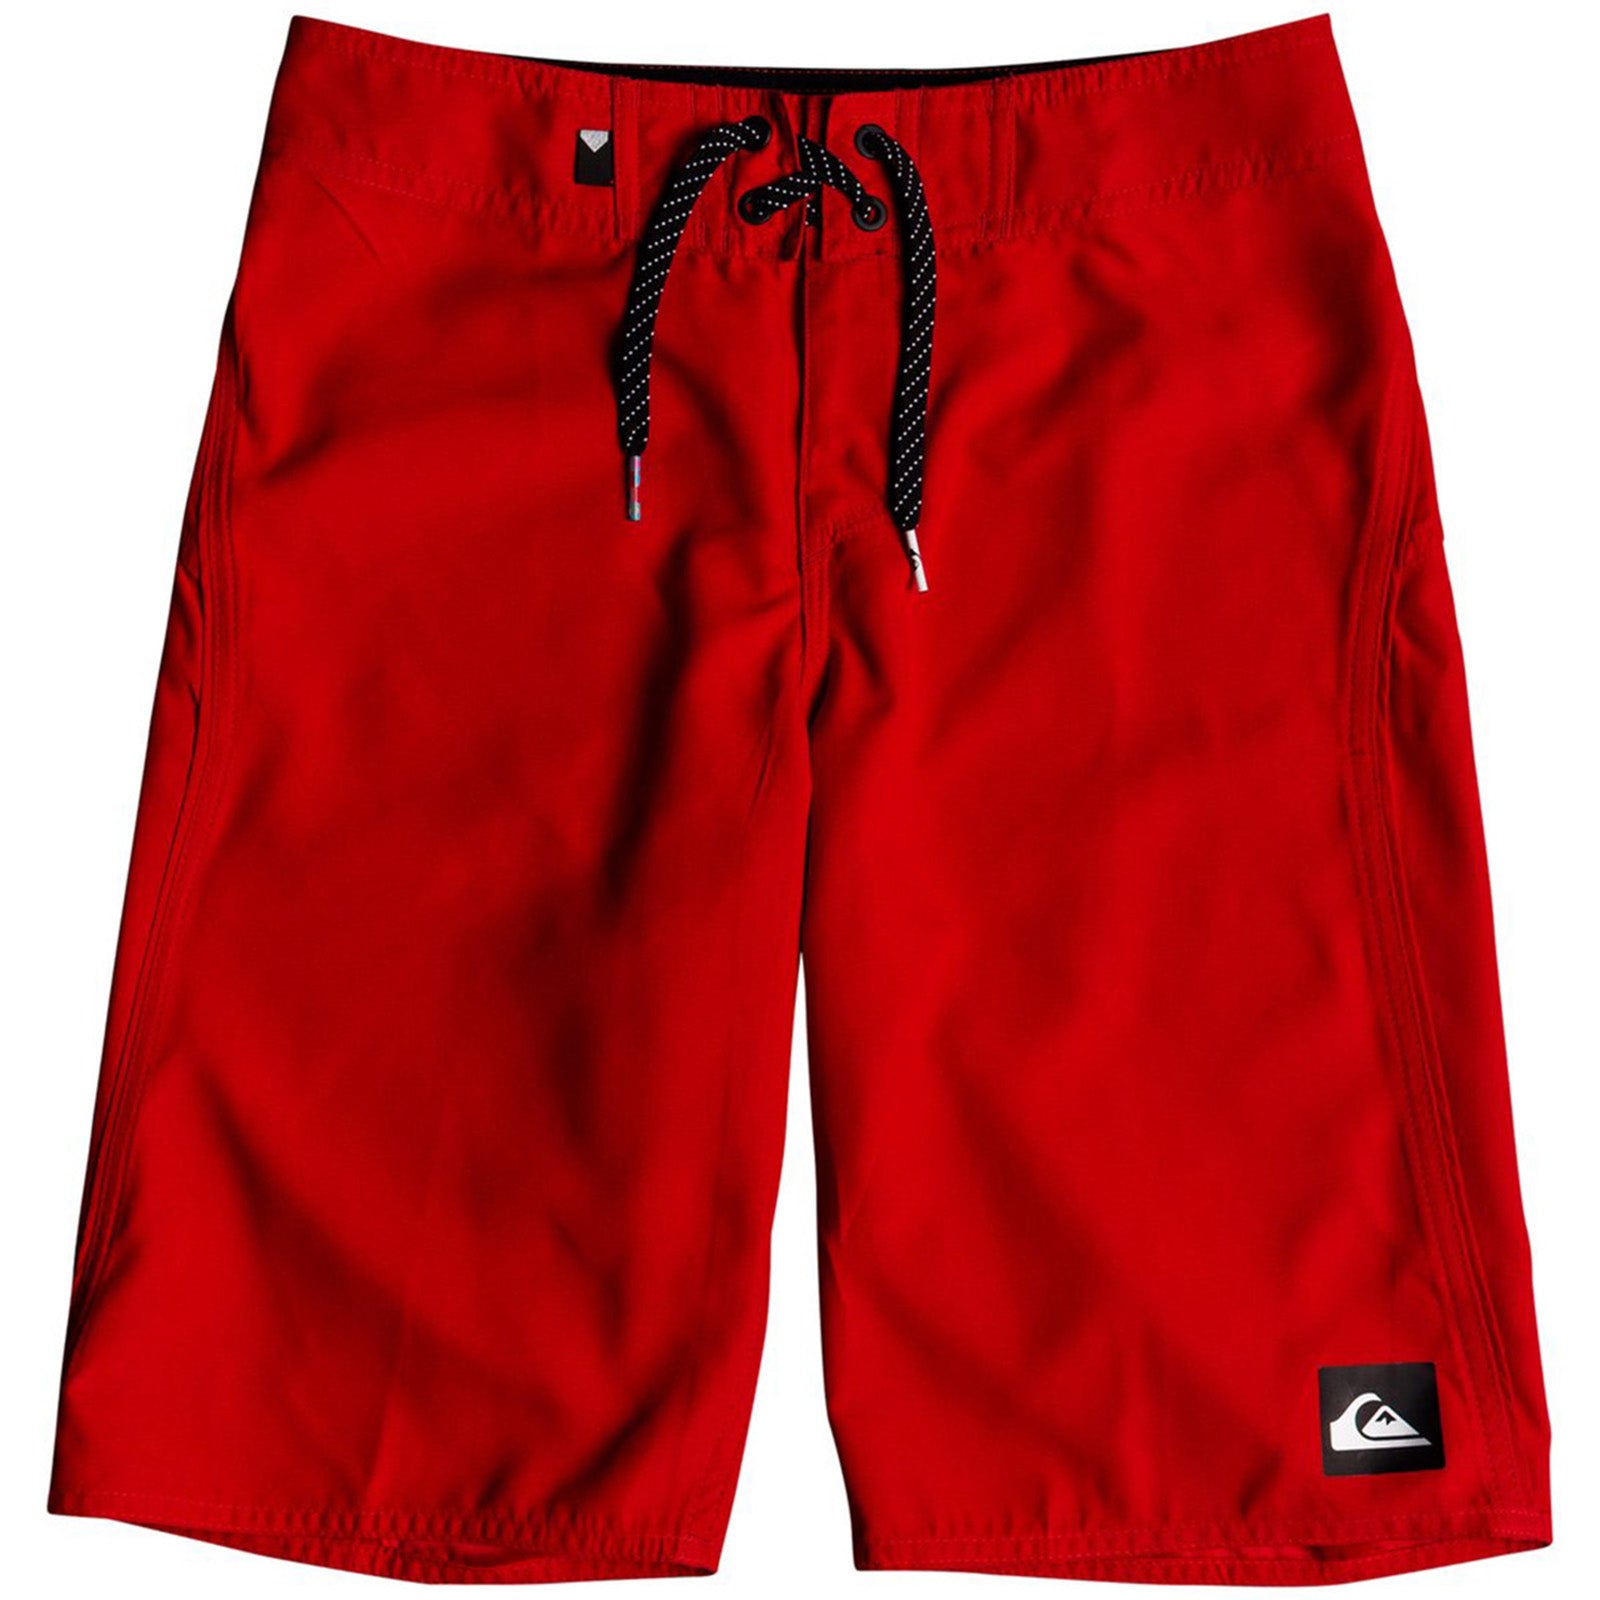 Quiksilver Highline Kaimana Youth Boys Boardshort Shorts-EQBBS03242